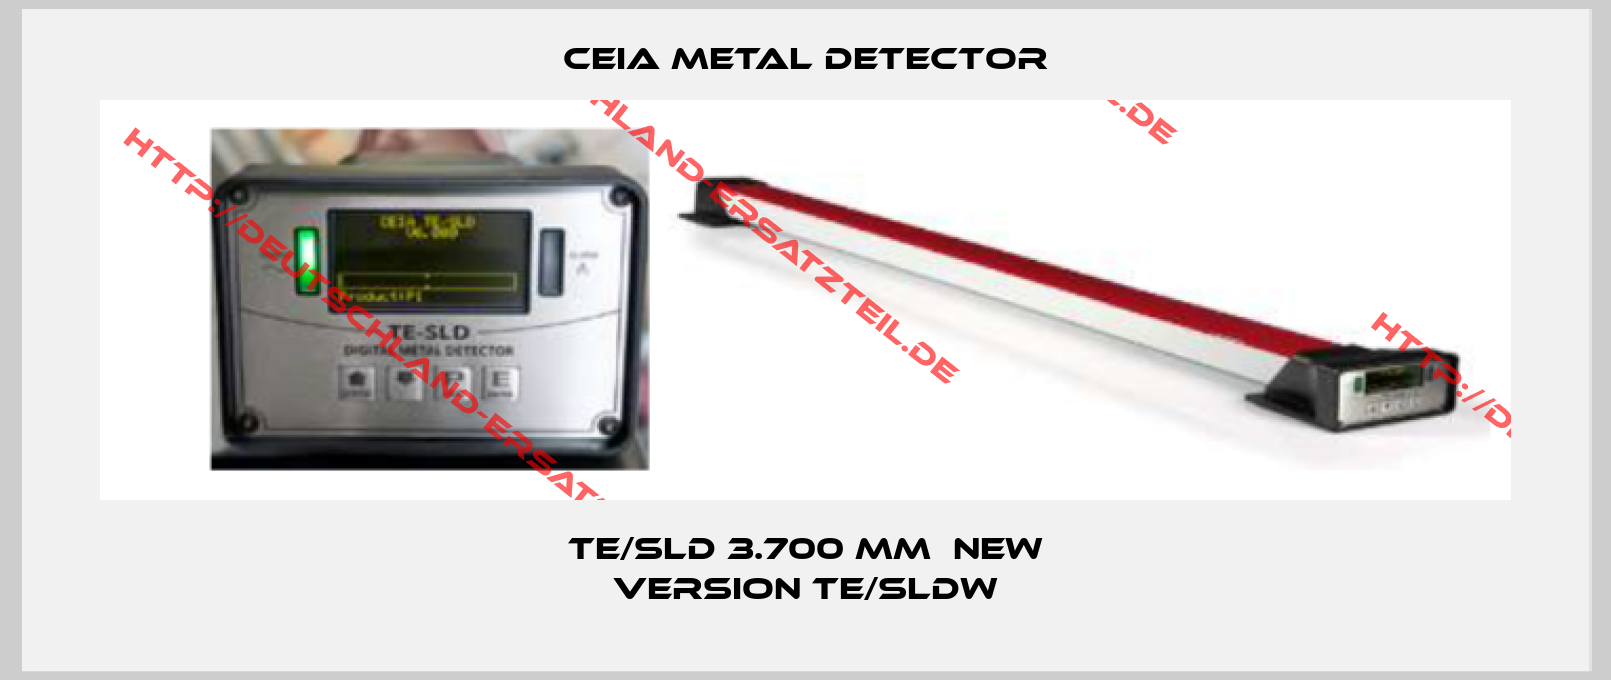 CEIA METAL DETECTOR-TE/SLD 3.700 mm  new version TE/SLDW